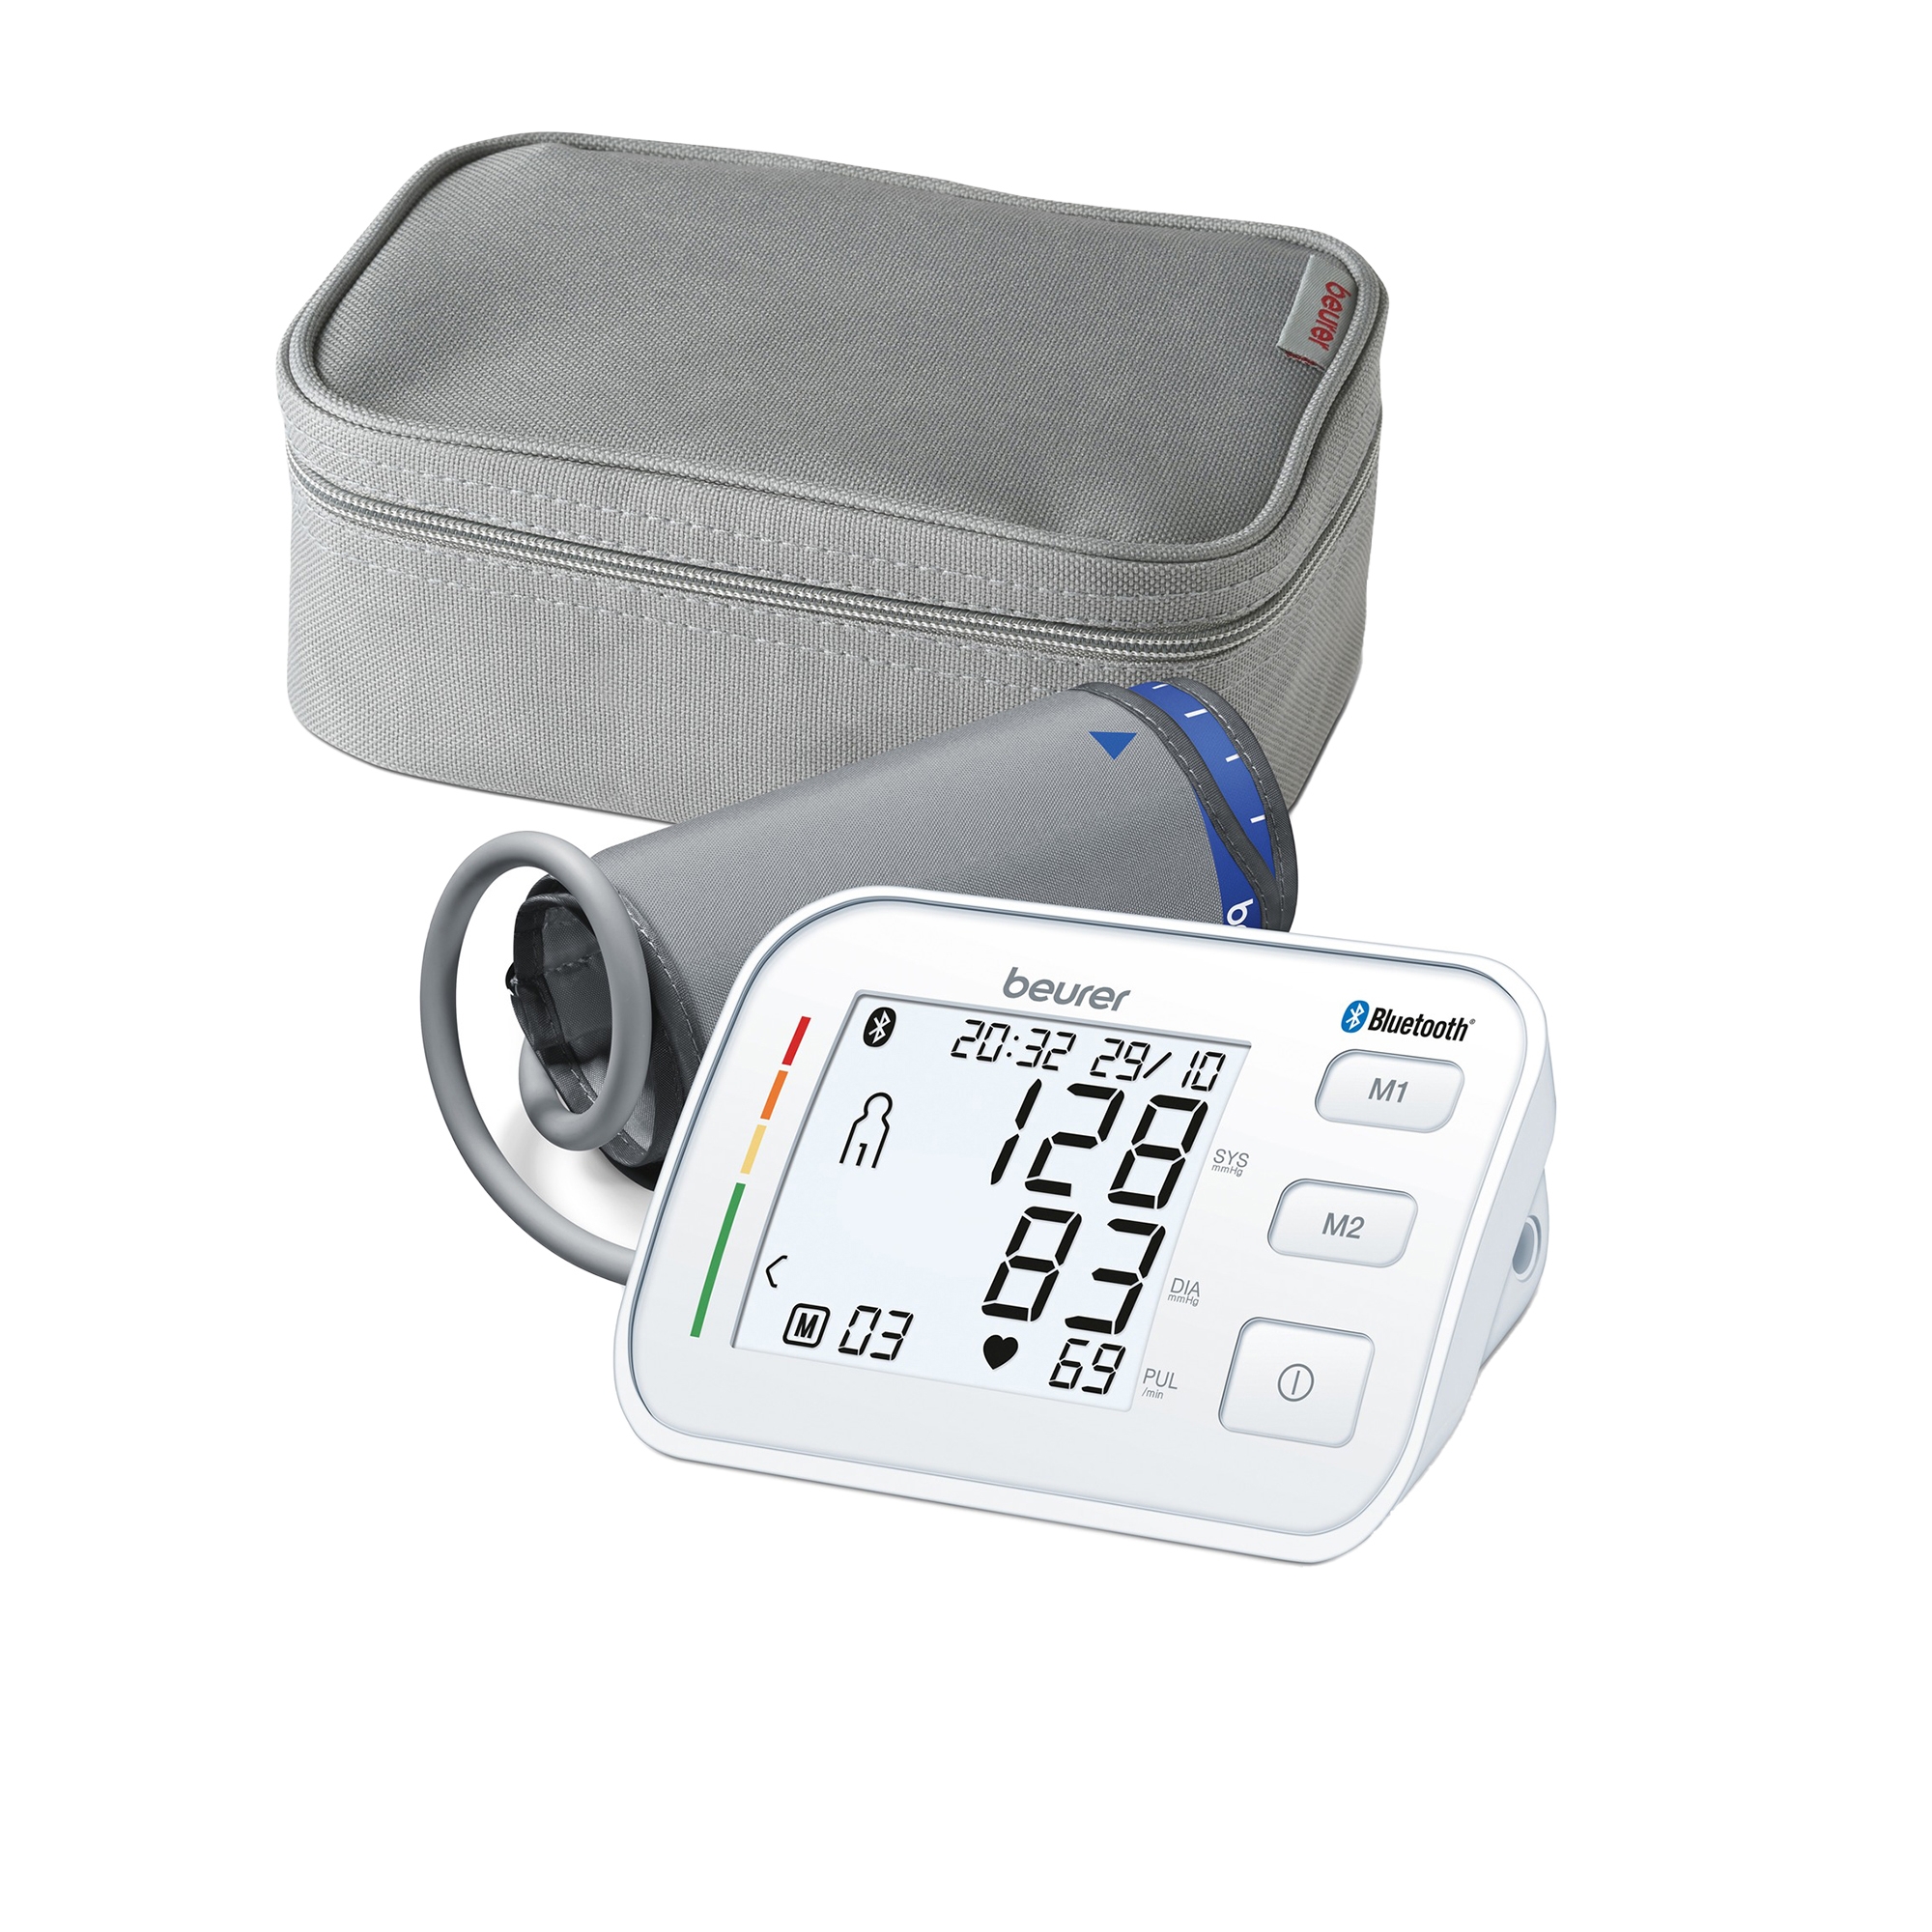 Beurer Bluetooth Upper Arm Blood Pressure Monitor Image 2